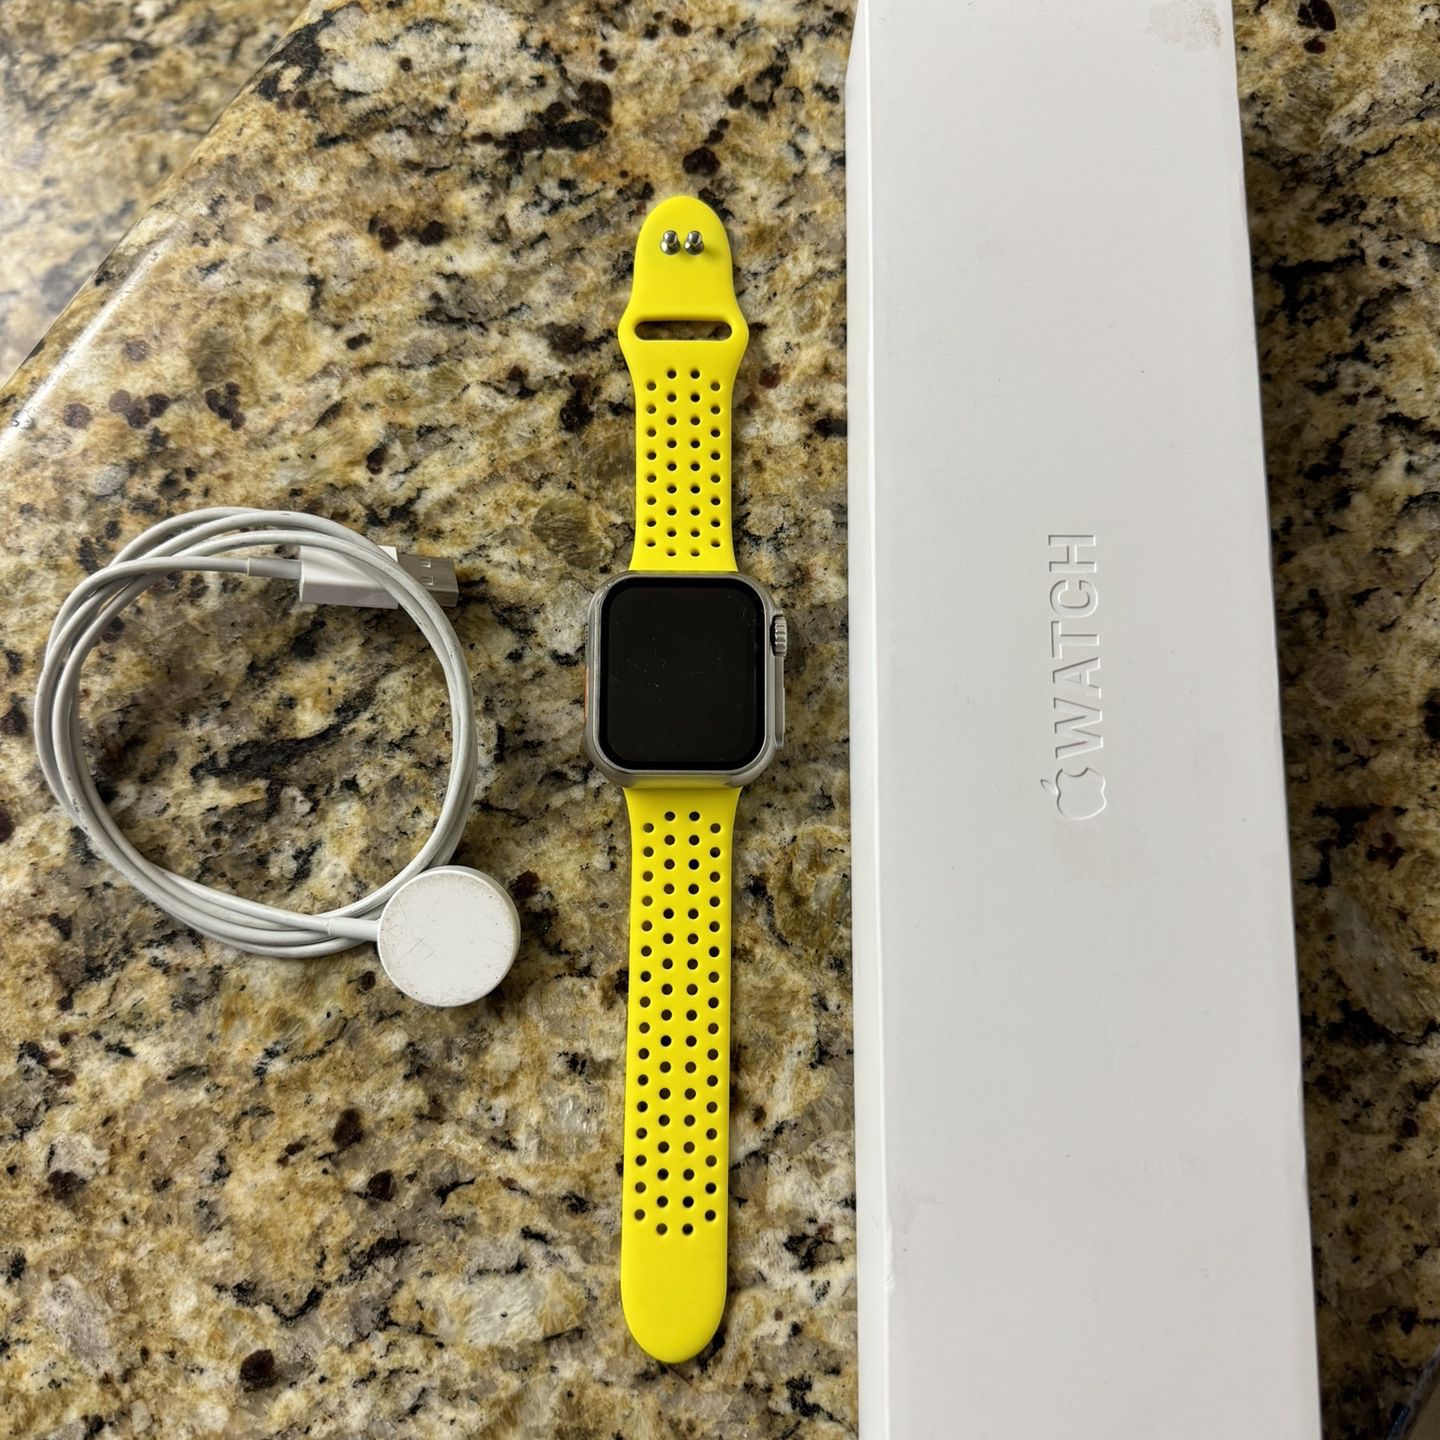 Apple Watch 6 Cellular GPS w screen protector, box